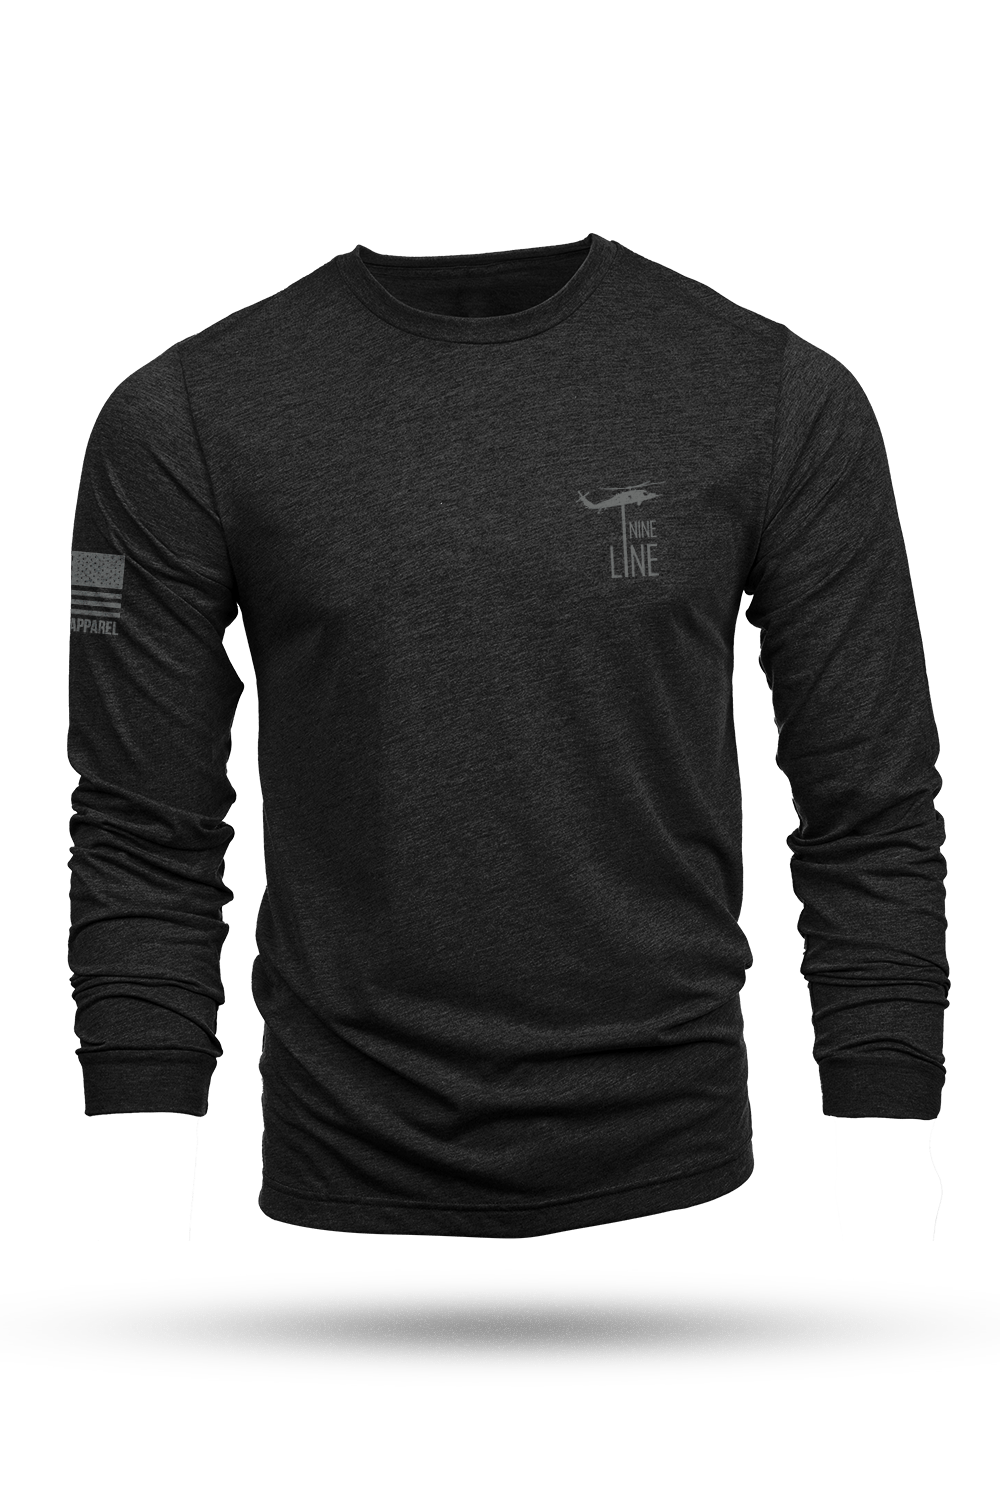 Long-Sleeve Shirt - Build & Fight